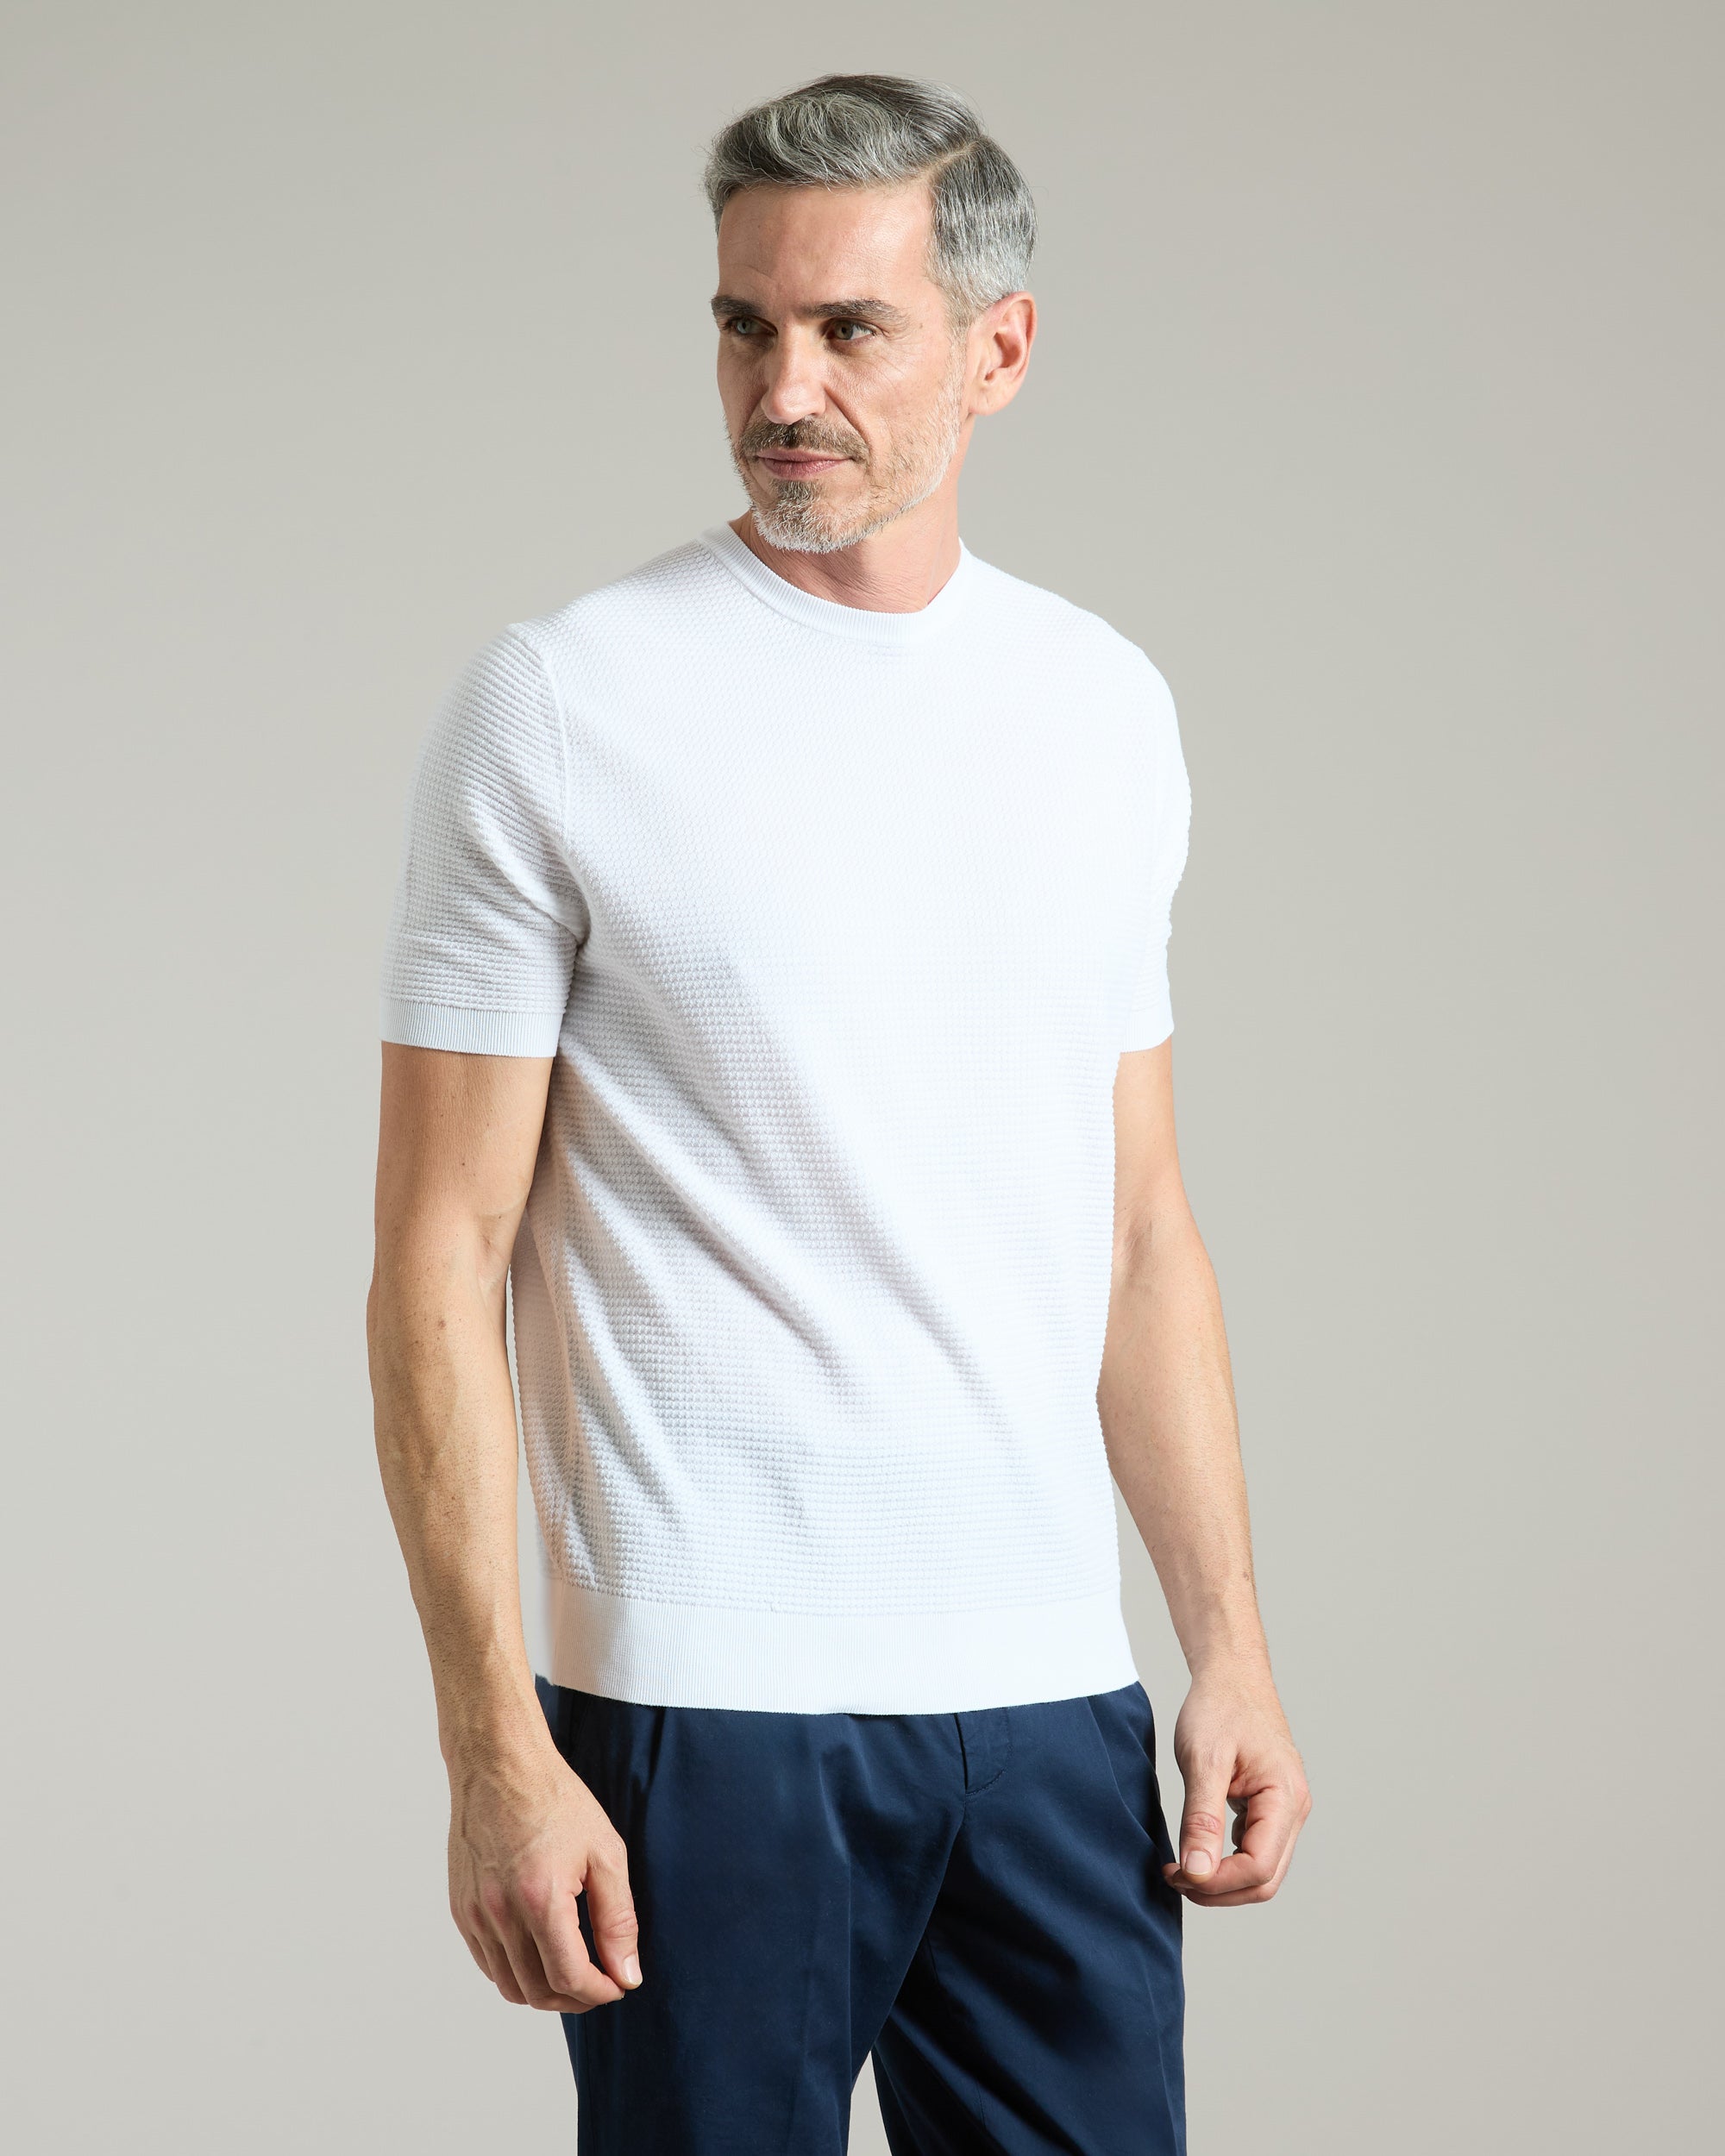 White cotton micro stitch T-shirt